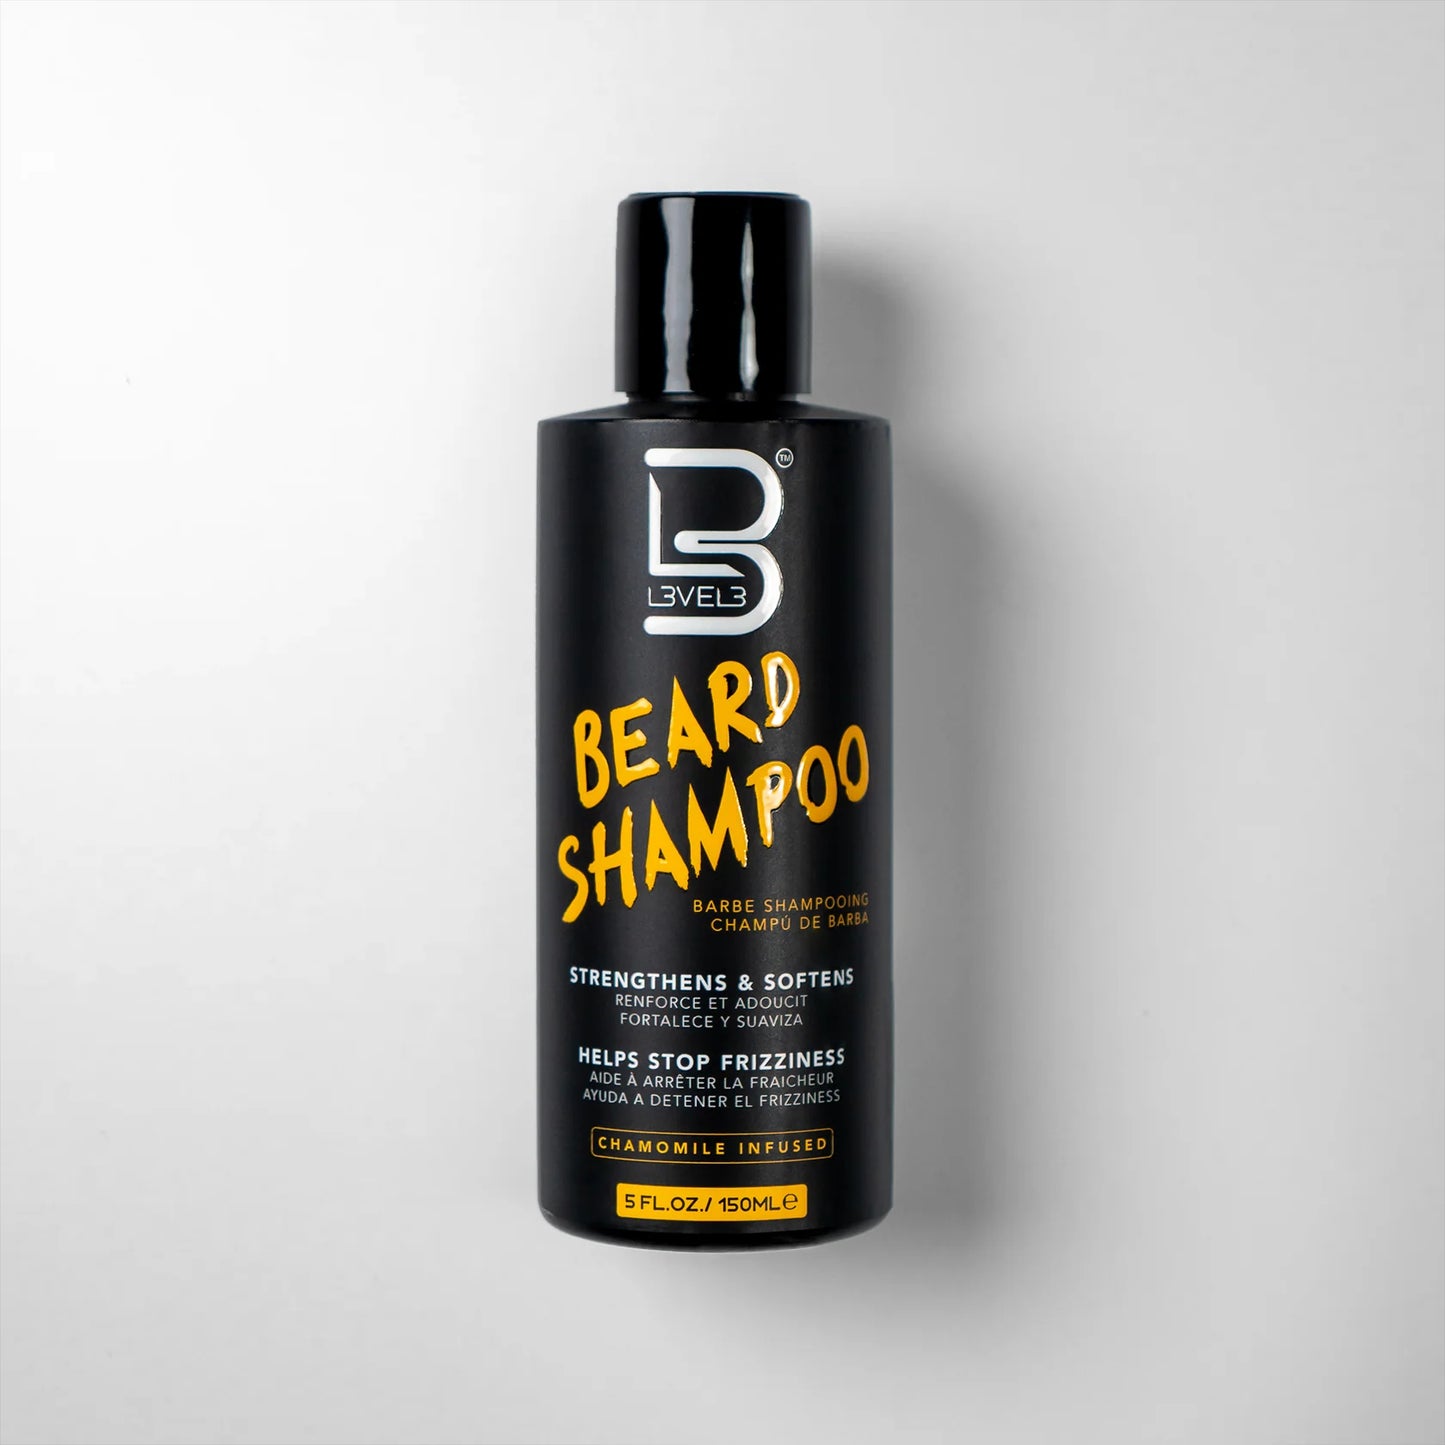 L3VEL3 Beard Shampoo